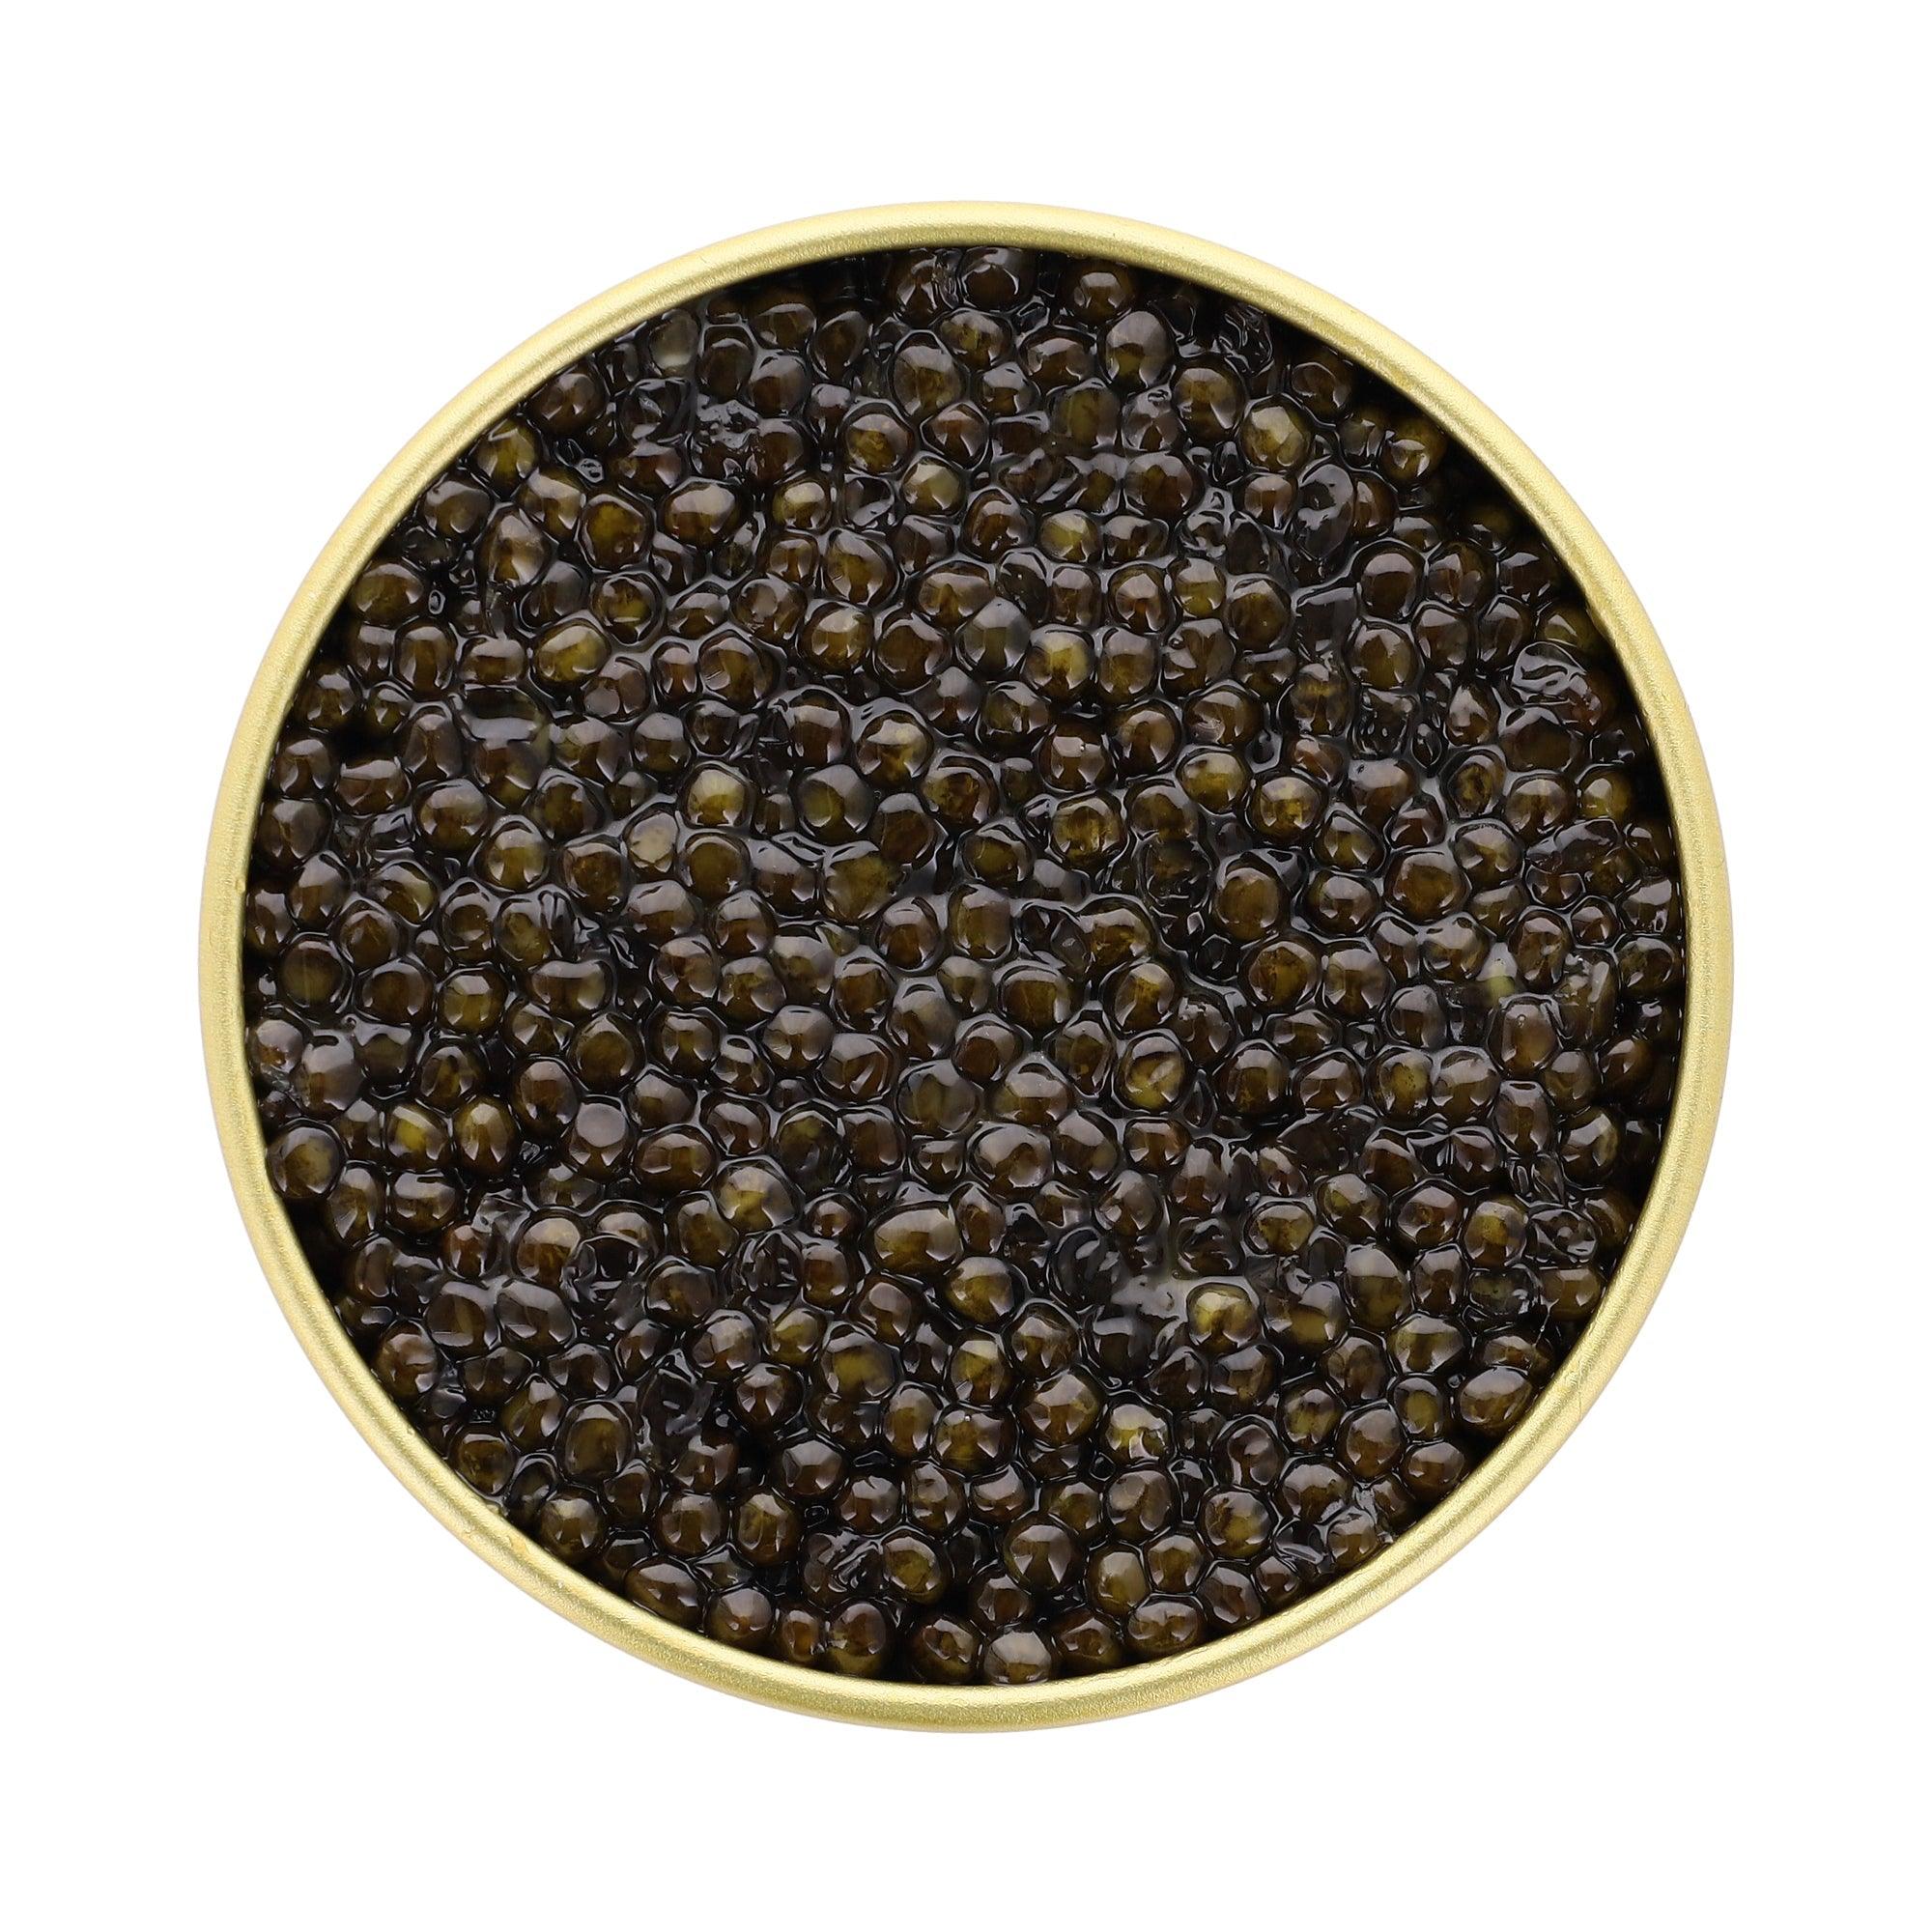 local farmed caviar from California, creamy and fishy taste